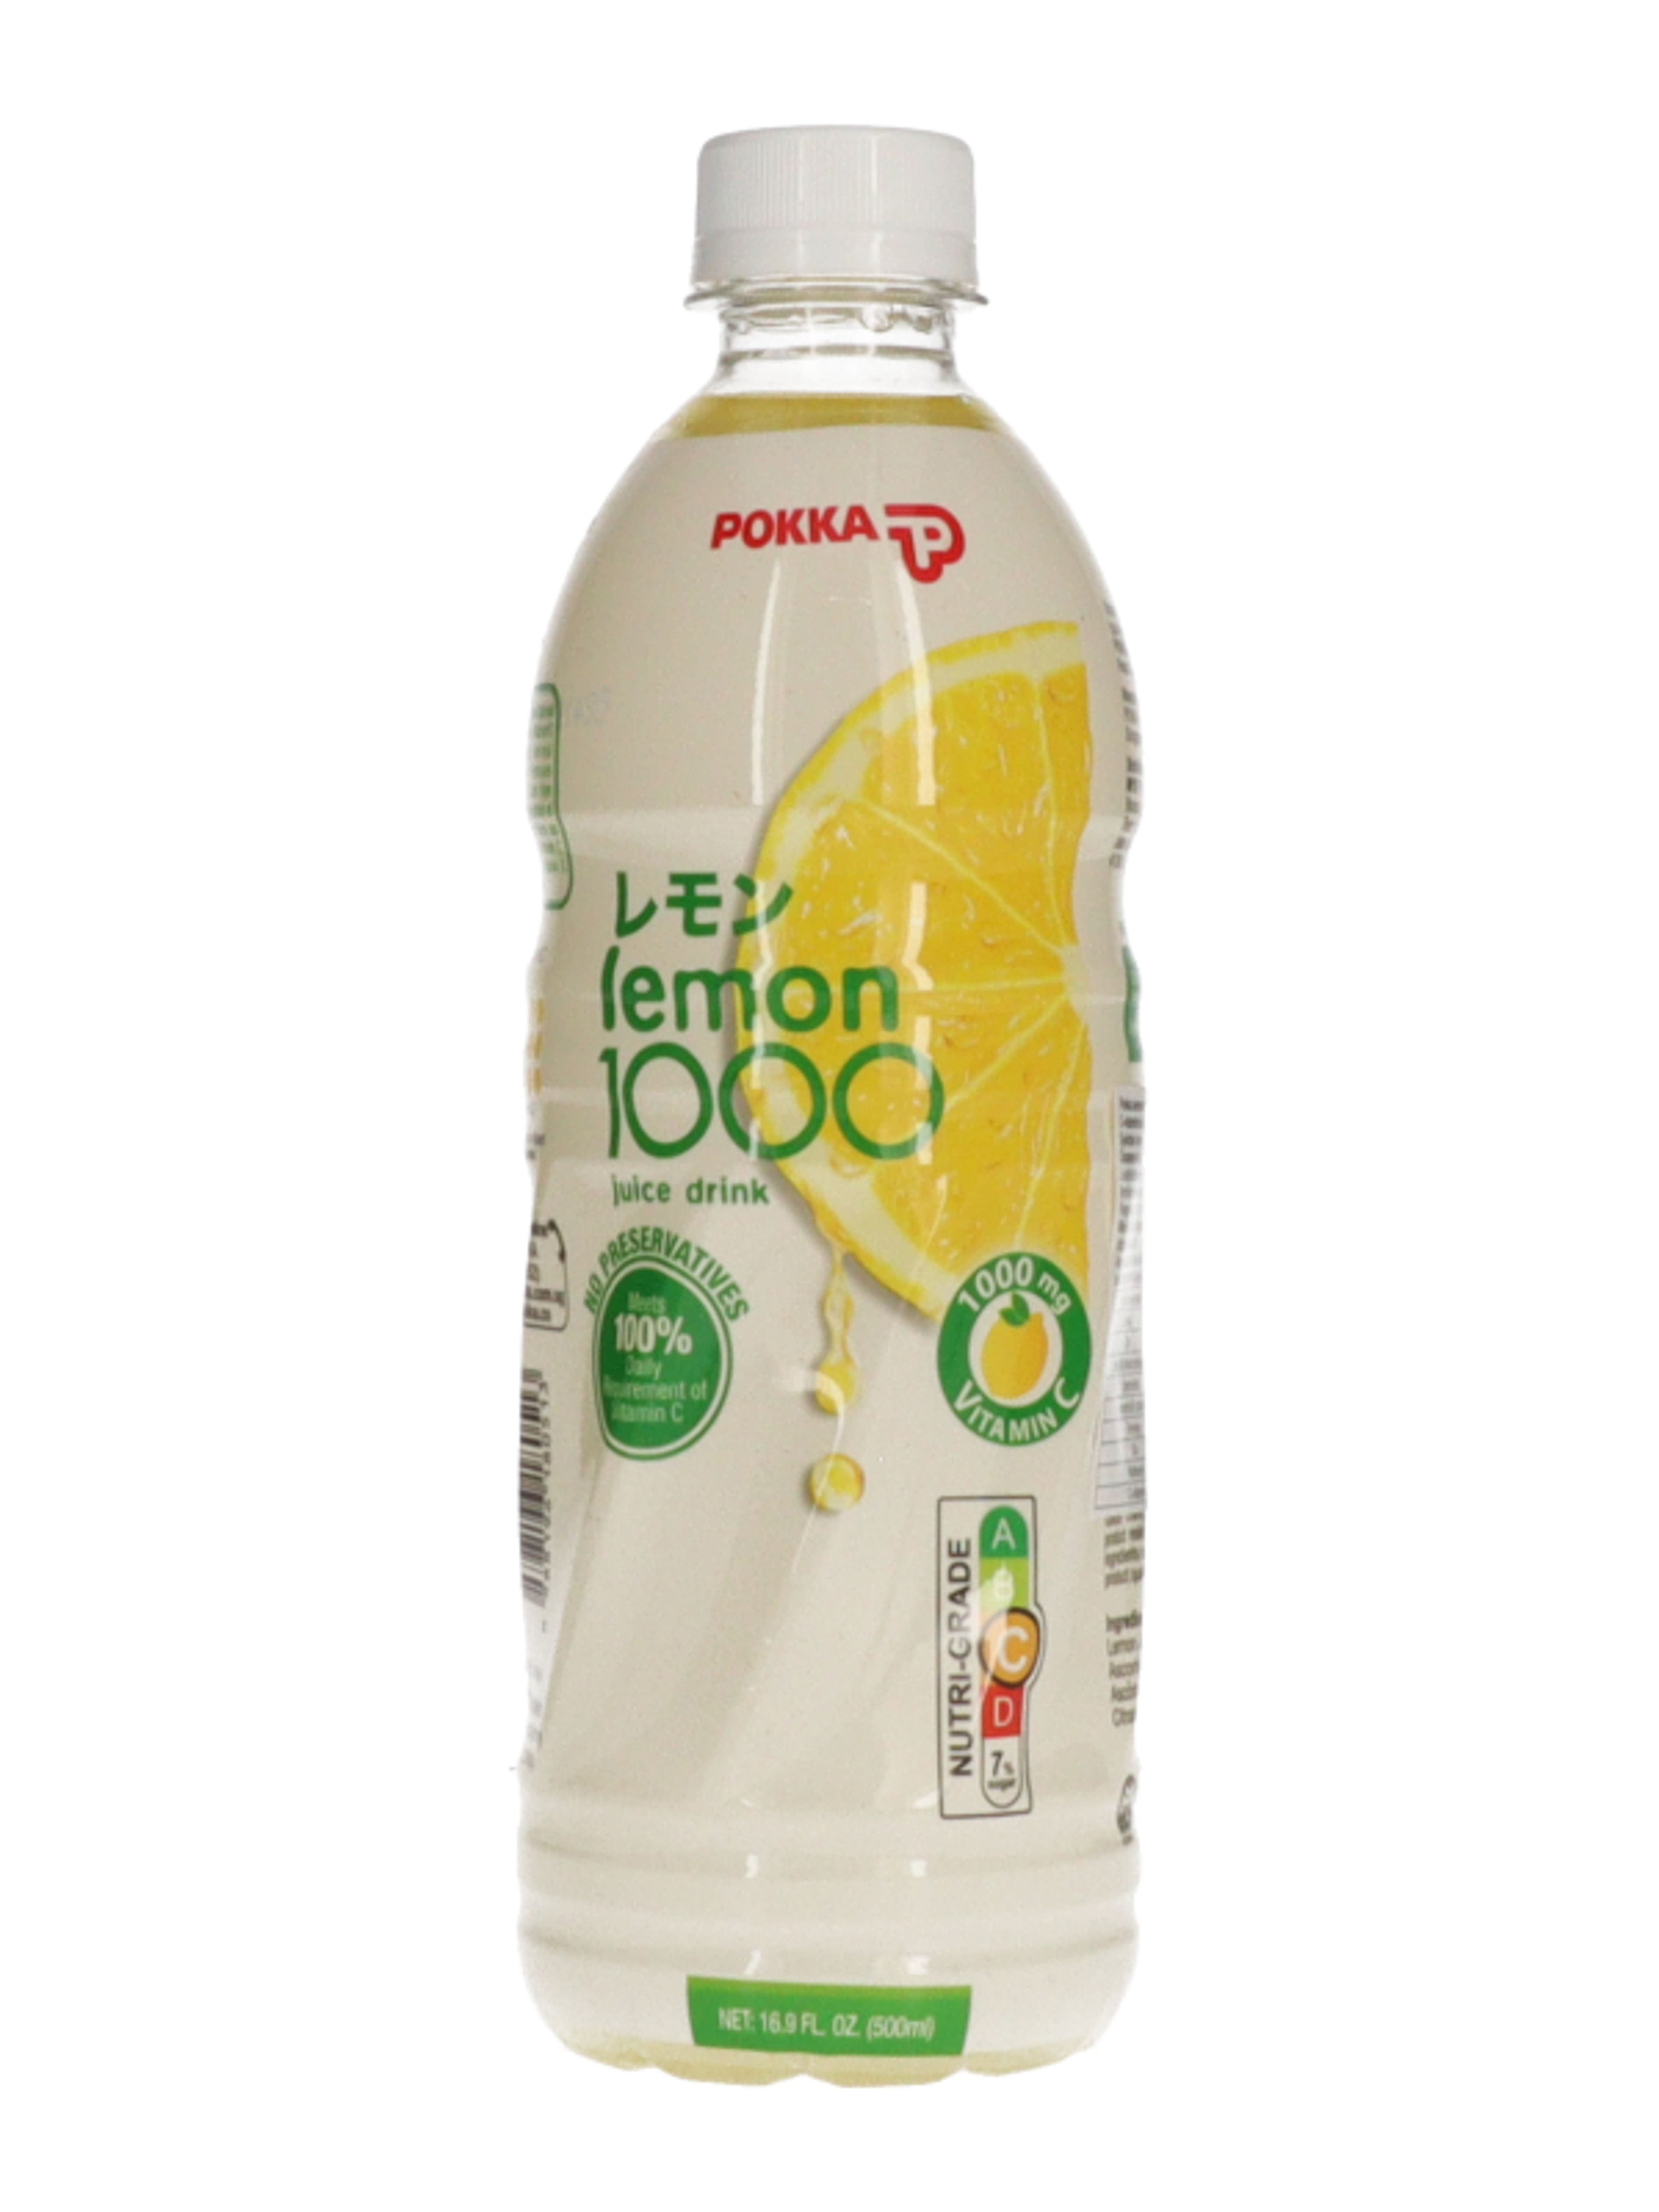 Pokka Lemon 1000 mg C-vitamin üdítőital - 500 ml